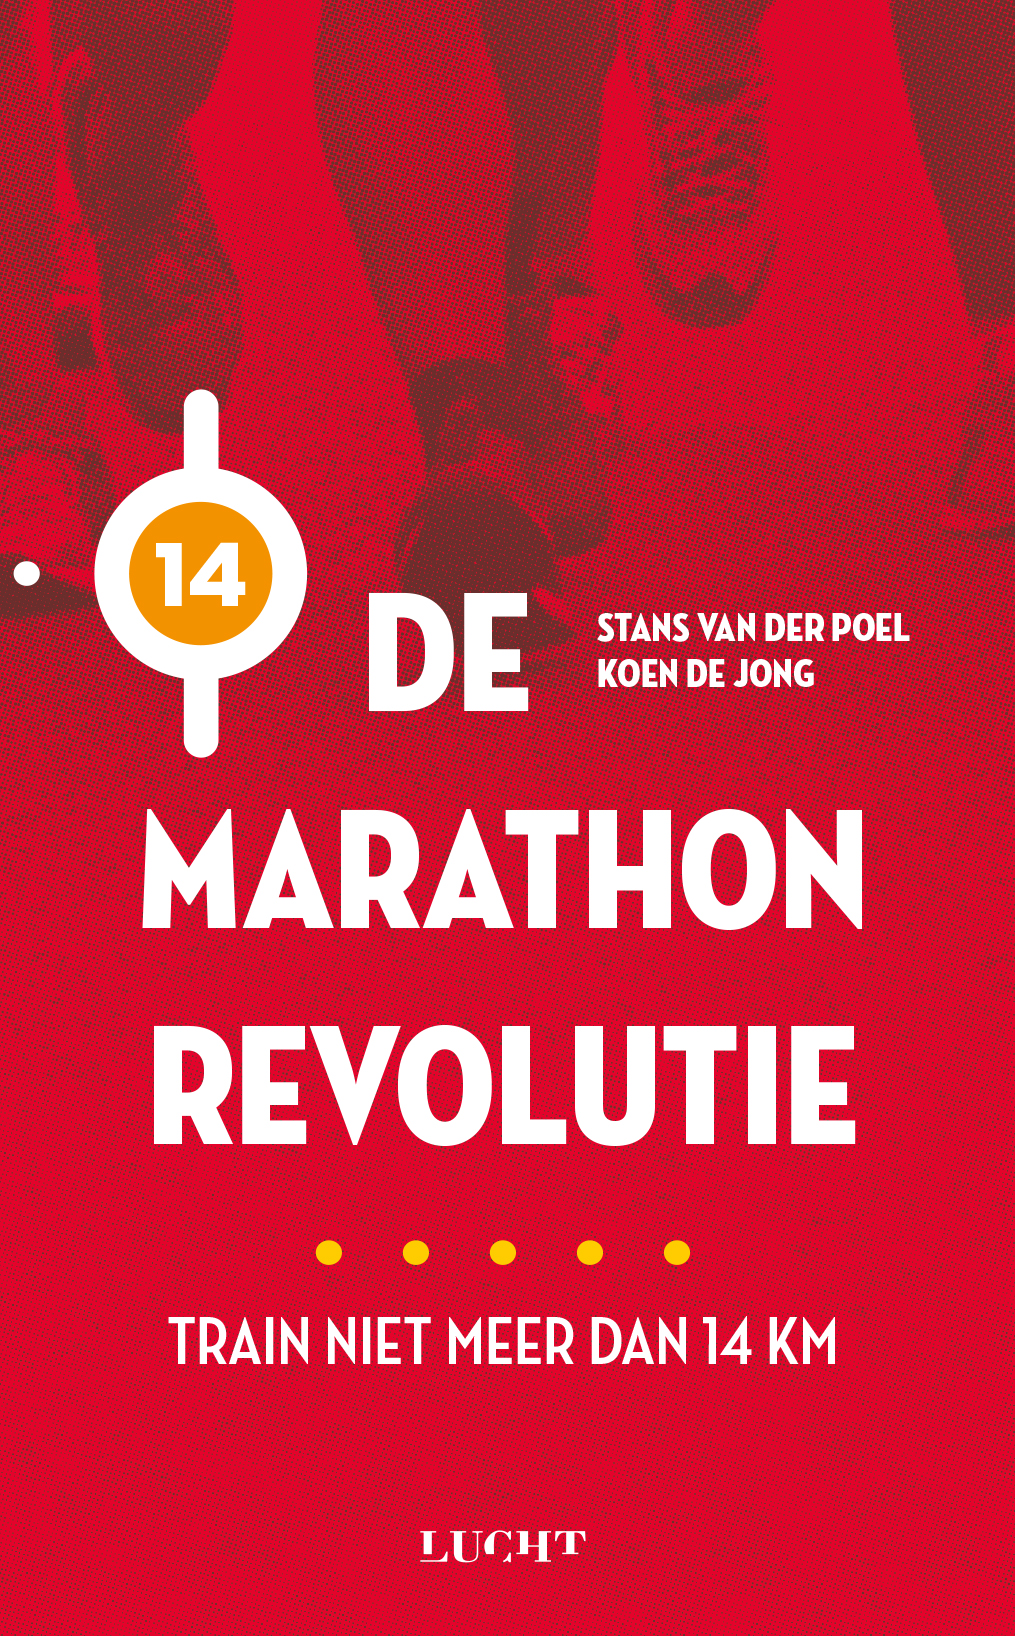 De marathon revolutie (Ebook)